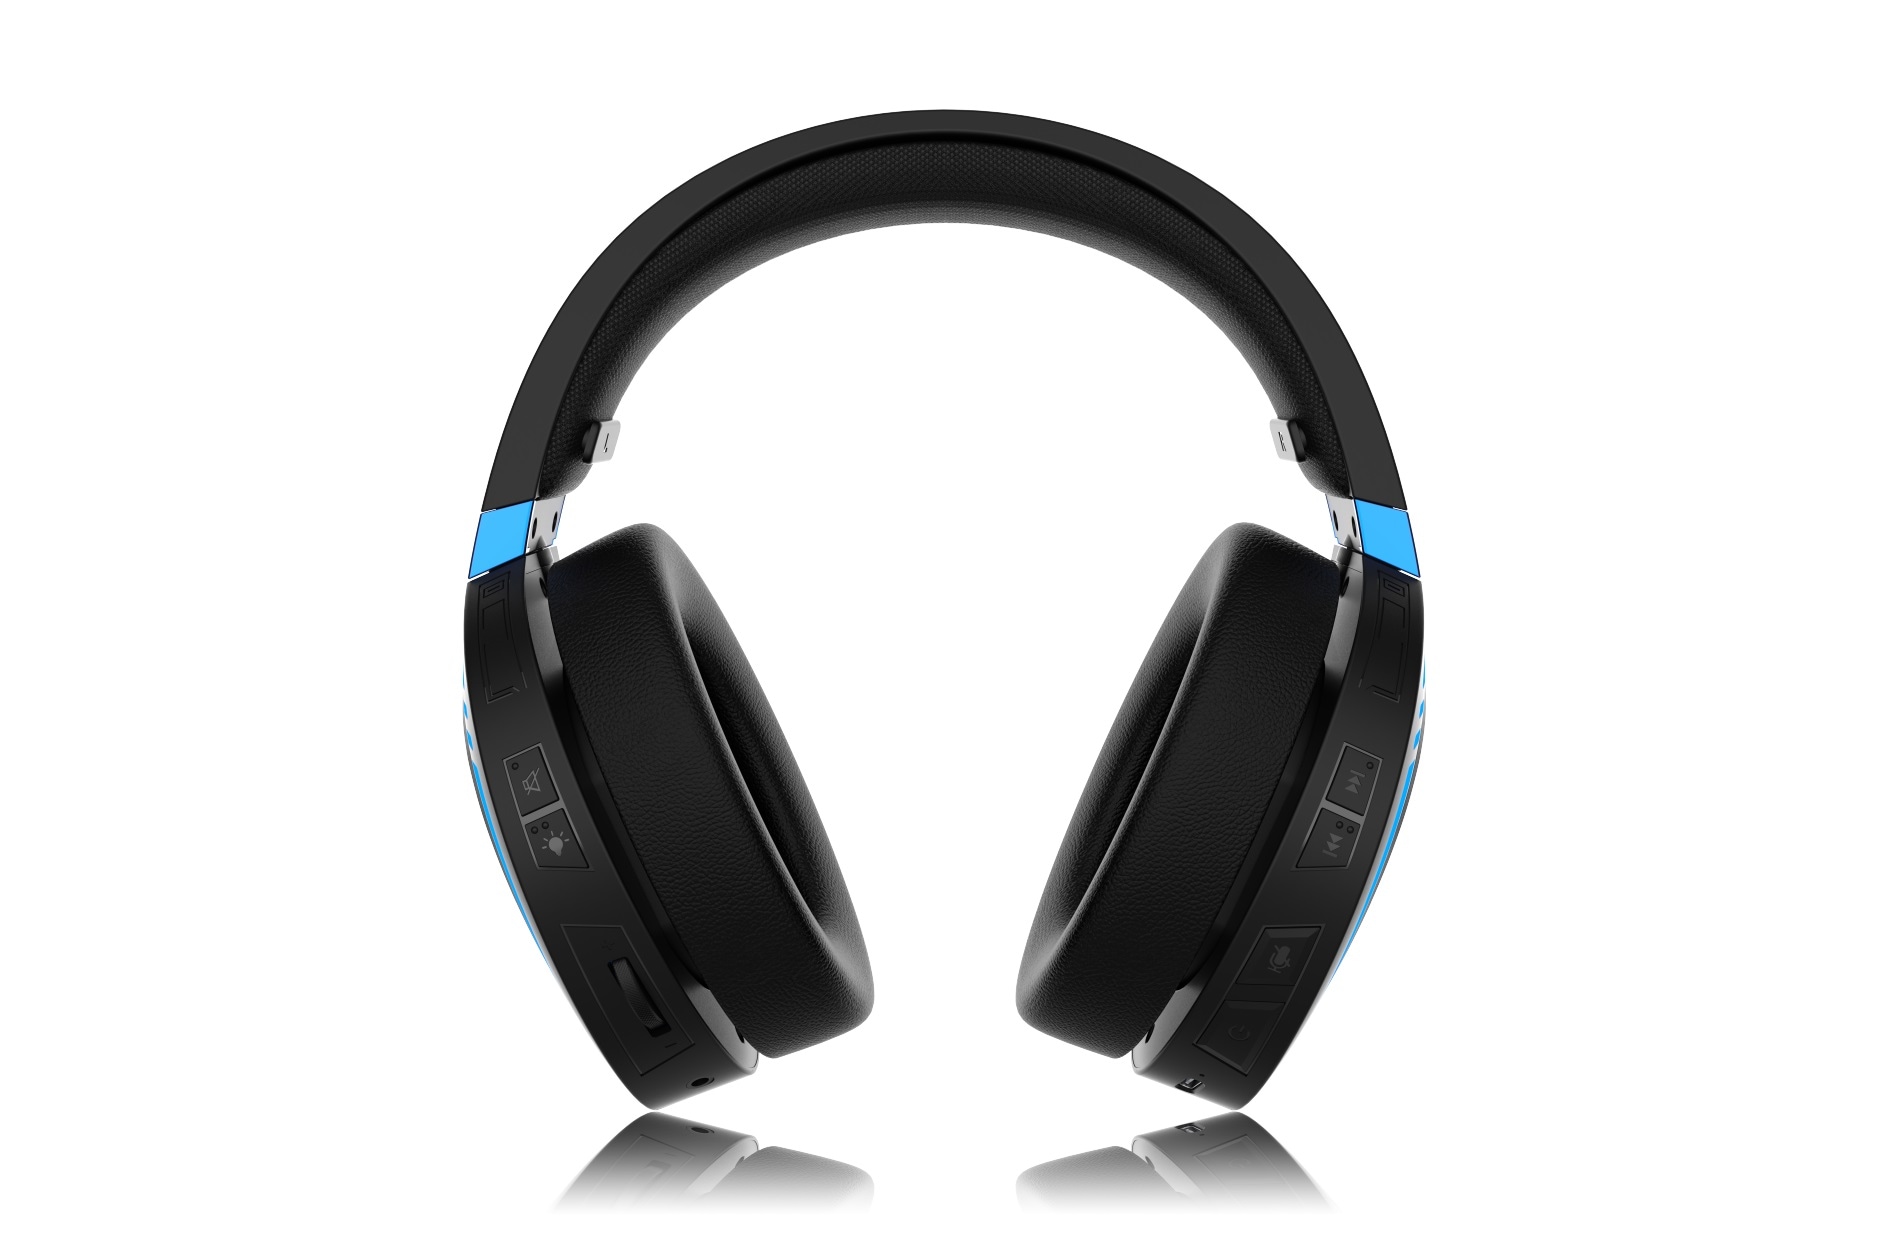 Sades Gaming-Headset »Warden I SA-201 Wireless, schwarz/blau, USB«, Rauschunterdrückung, inklusive Anubis' Staff Headset Ständer SA-W10, USB